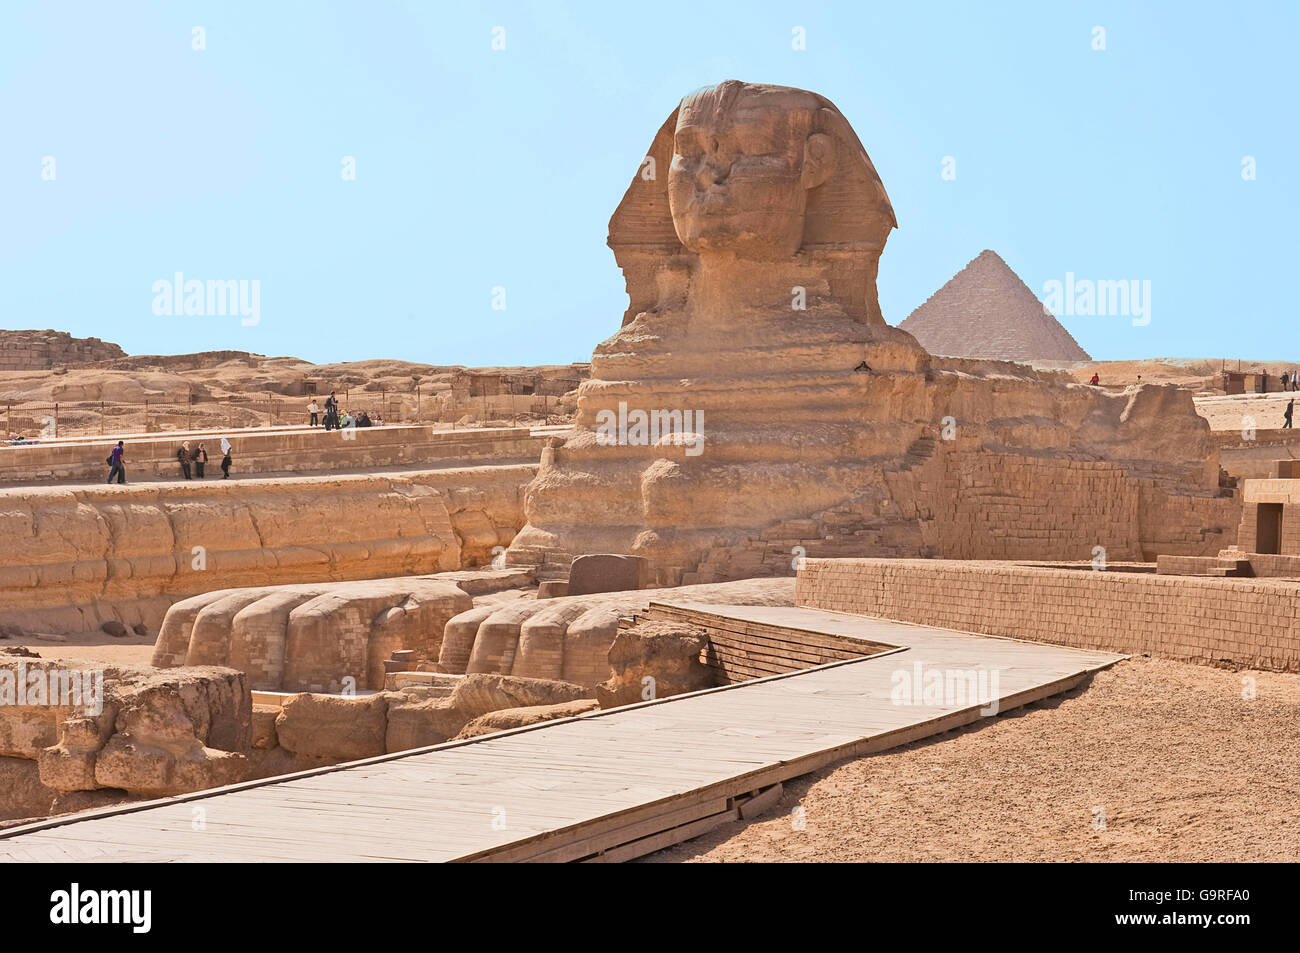 Le grand Sphinx de Gizeh, grande pyramide de Gizeh, pyramides de Gizeh, Giza, Egypte / Pyramide de Khéops, pyramide de Chéops Banque D'Images